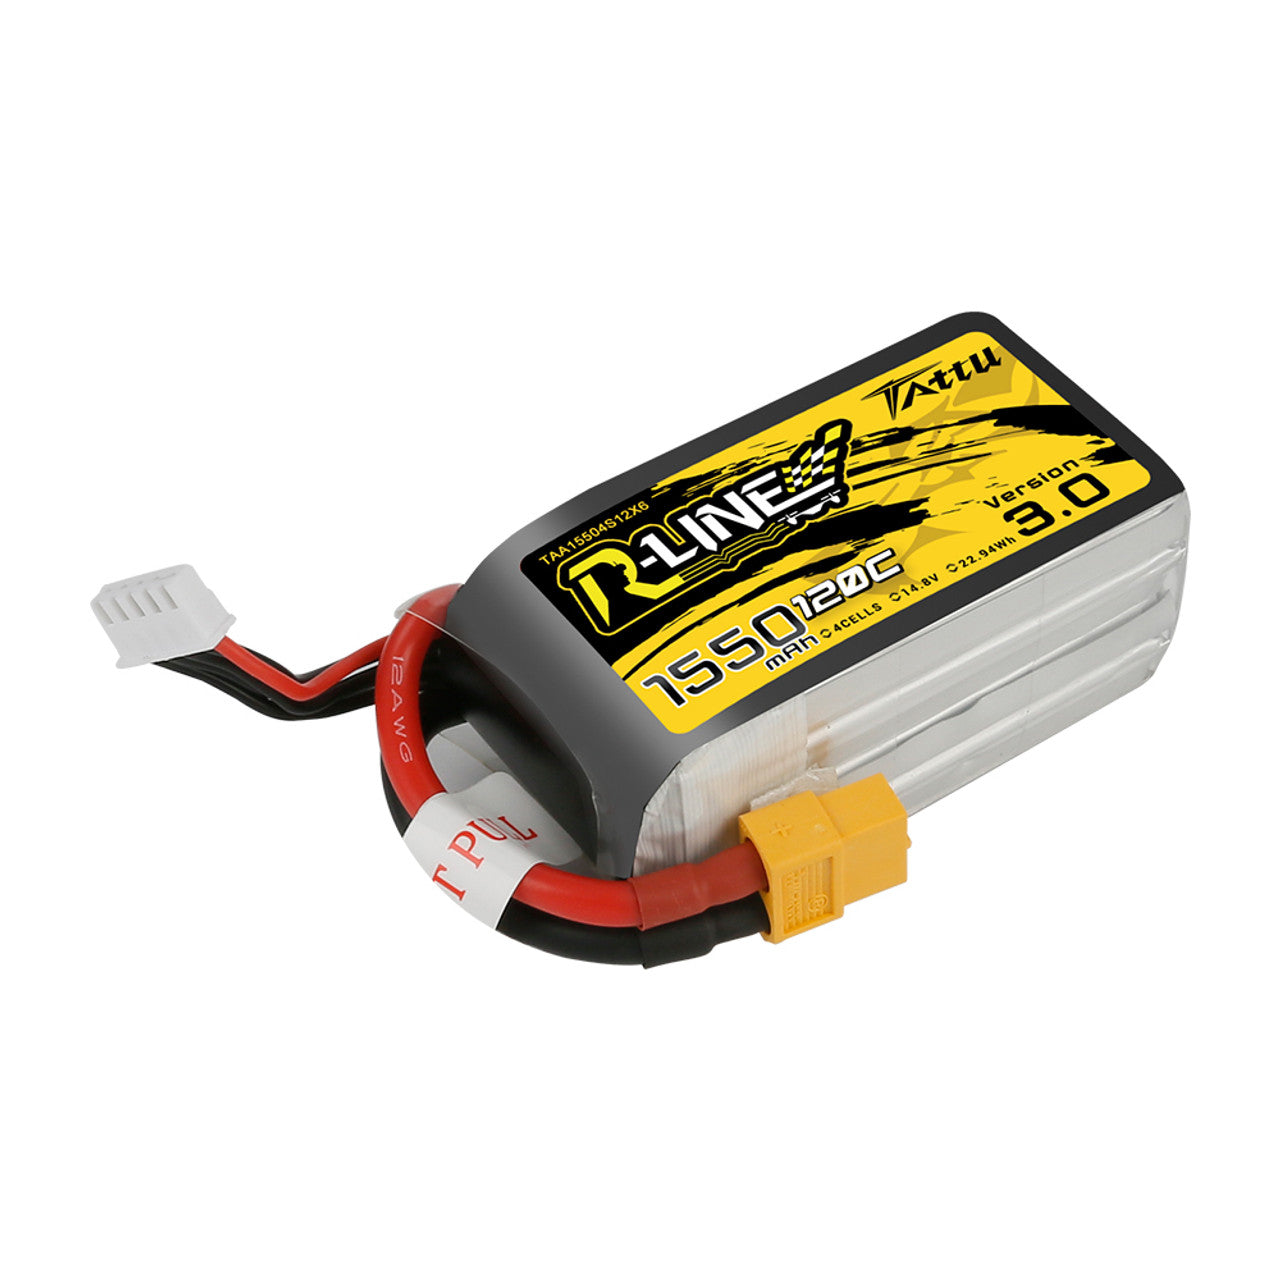 Tattu R-Line Version 3.0 1550mAh 14.8V 120C 4S1P Lipo Battery Pack with XT60 Plug - DroneDynamics.ca